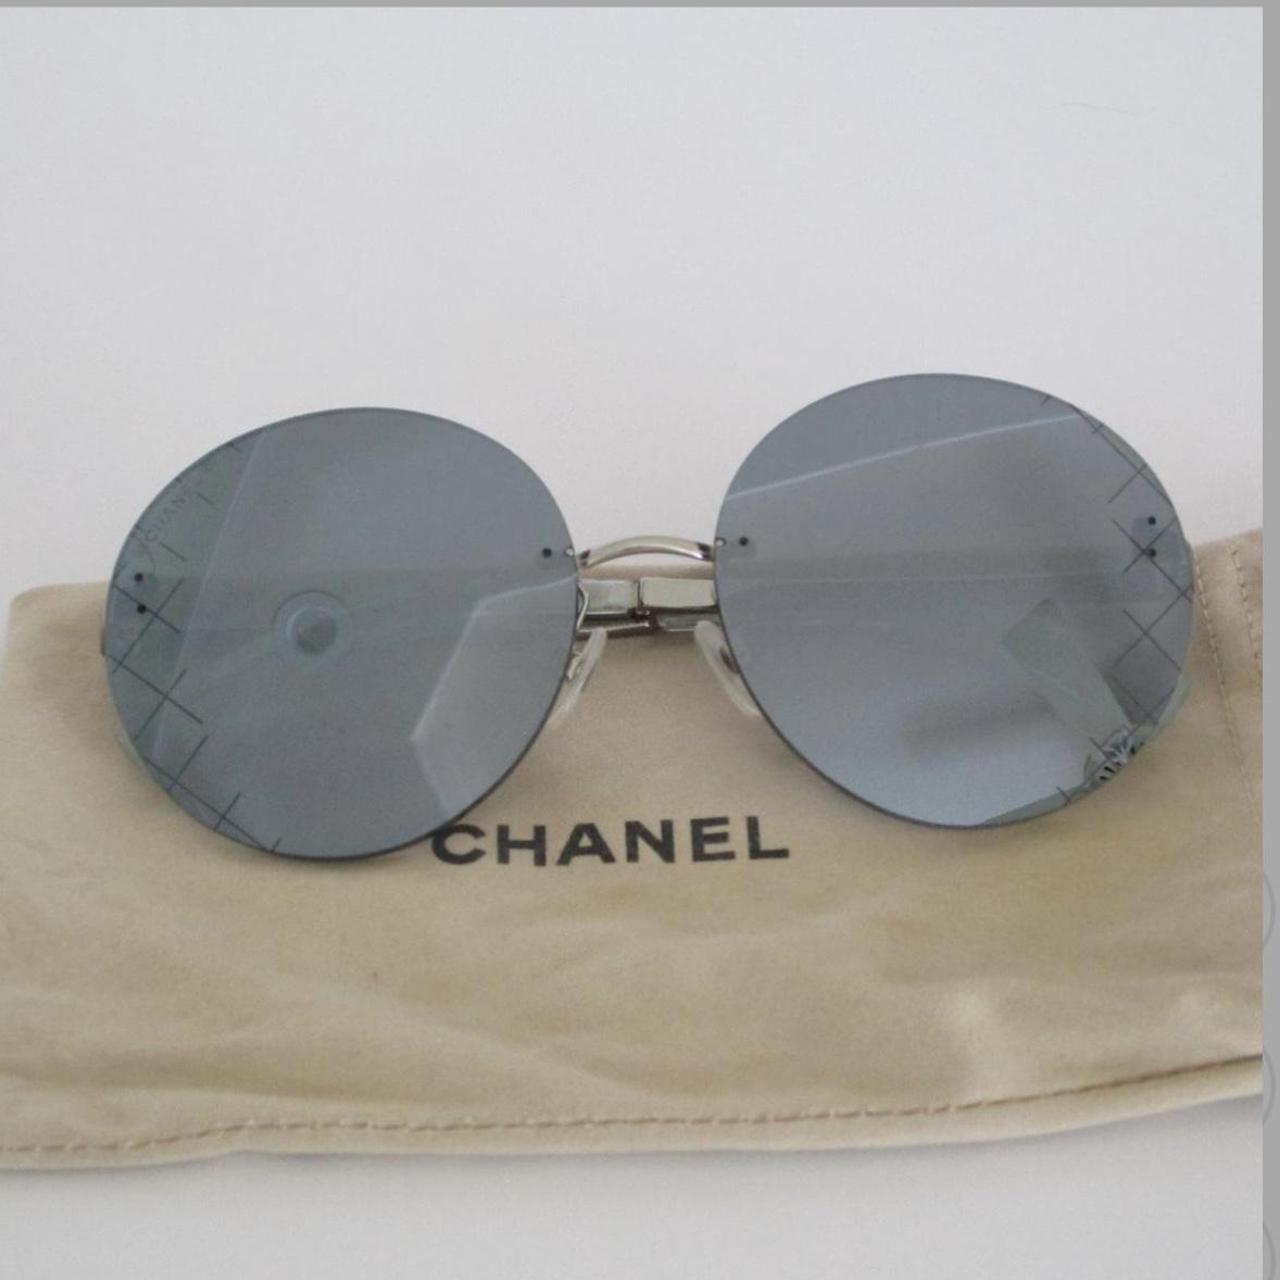 Chanel Blue Round Reflective Sunglasses, Style